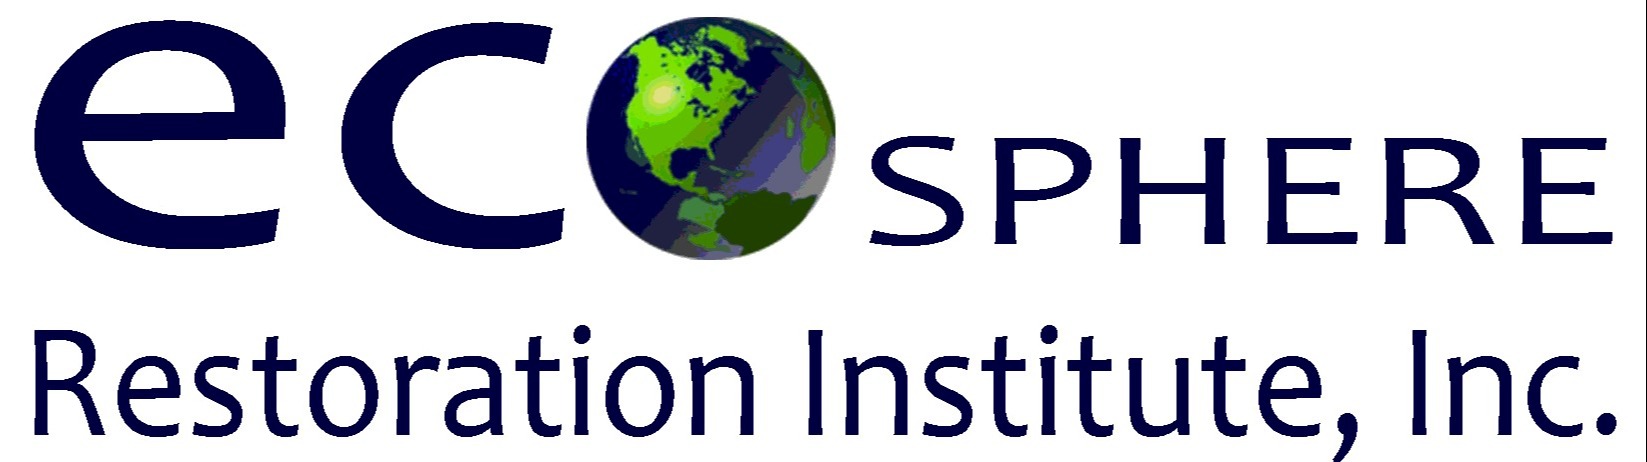 Ecosphere Restoration Institute logo